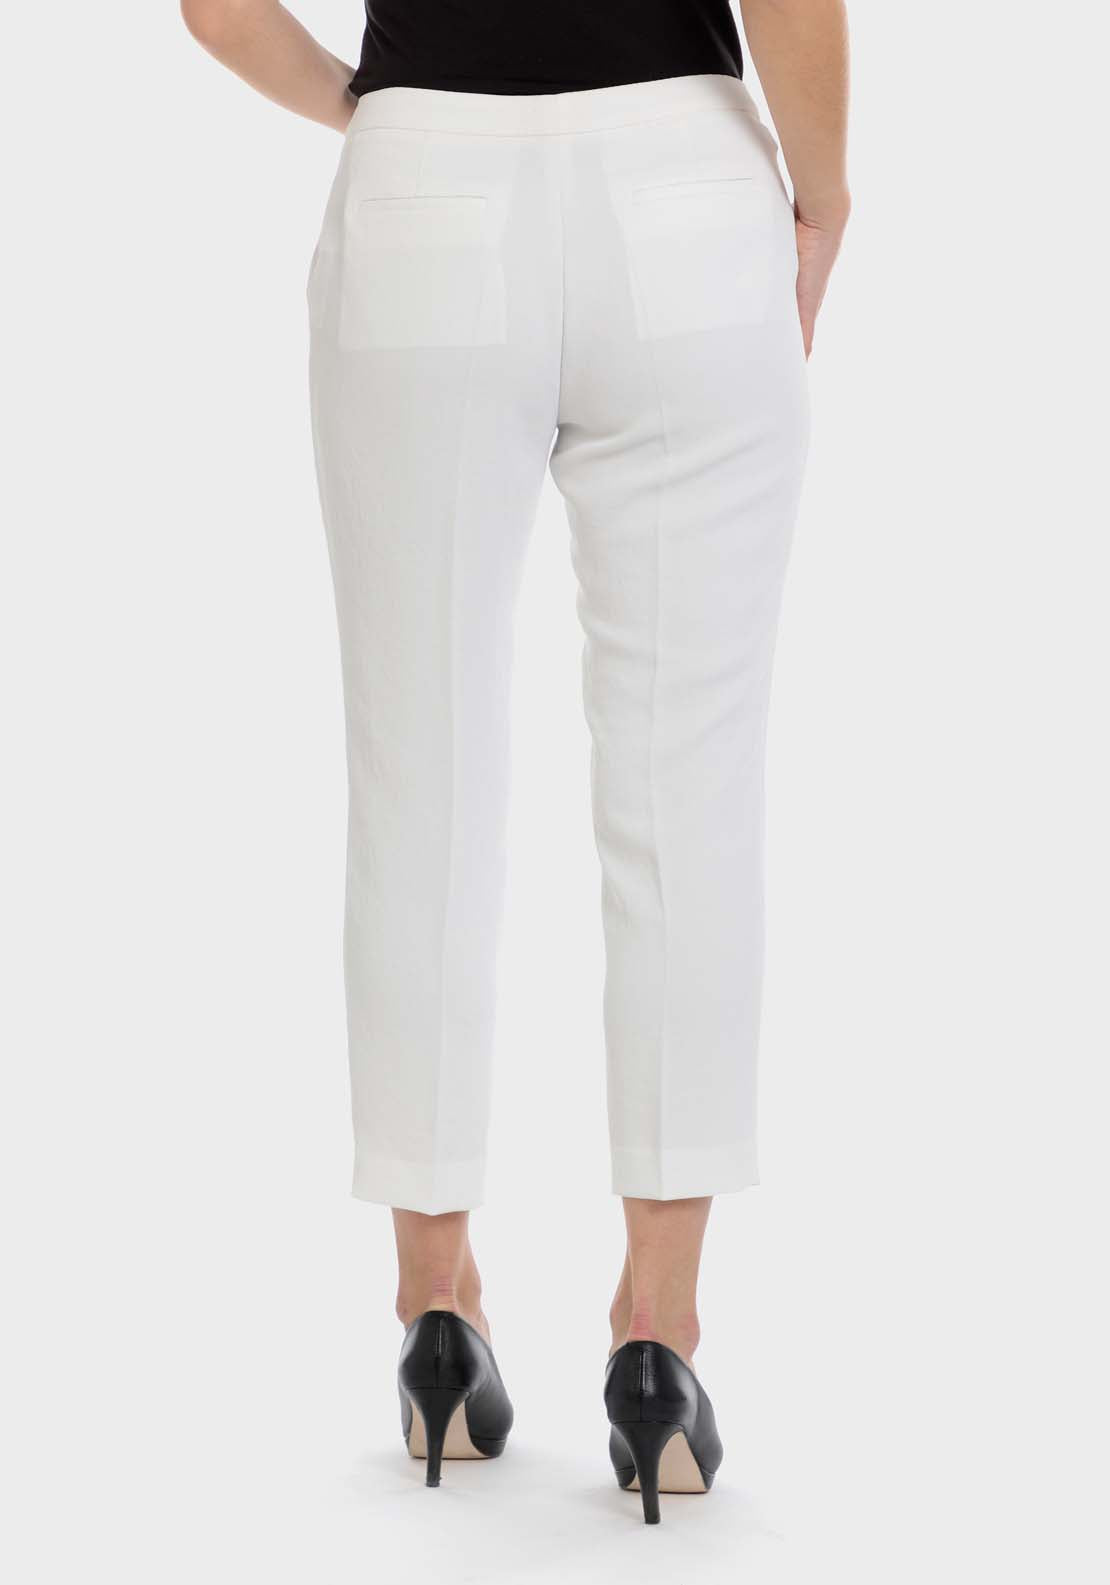 Punt Roma Capri Trousers - White 3 Shaws Department Stores